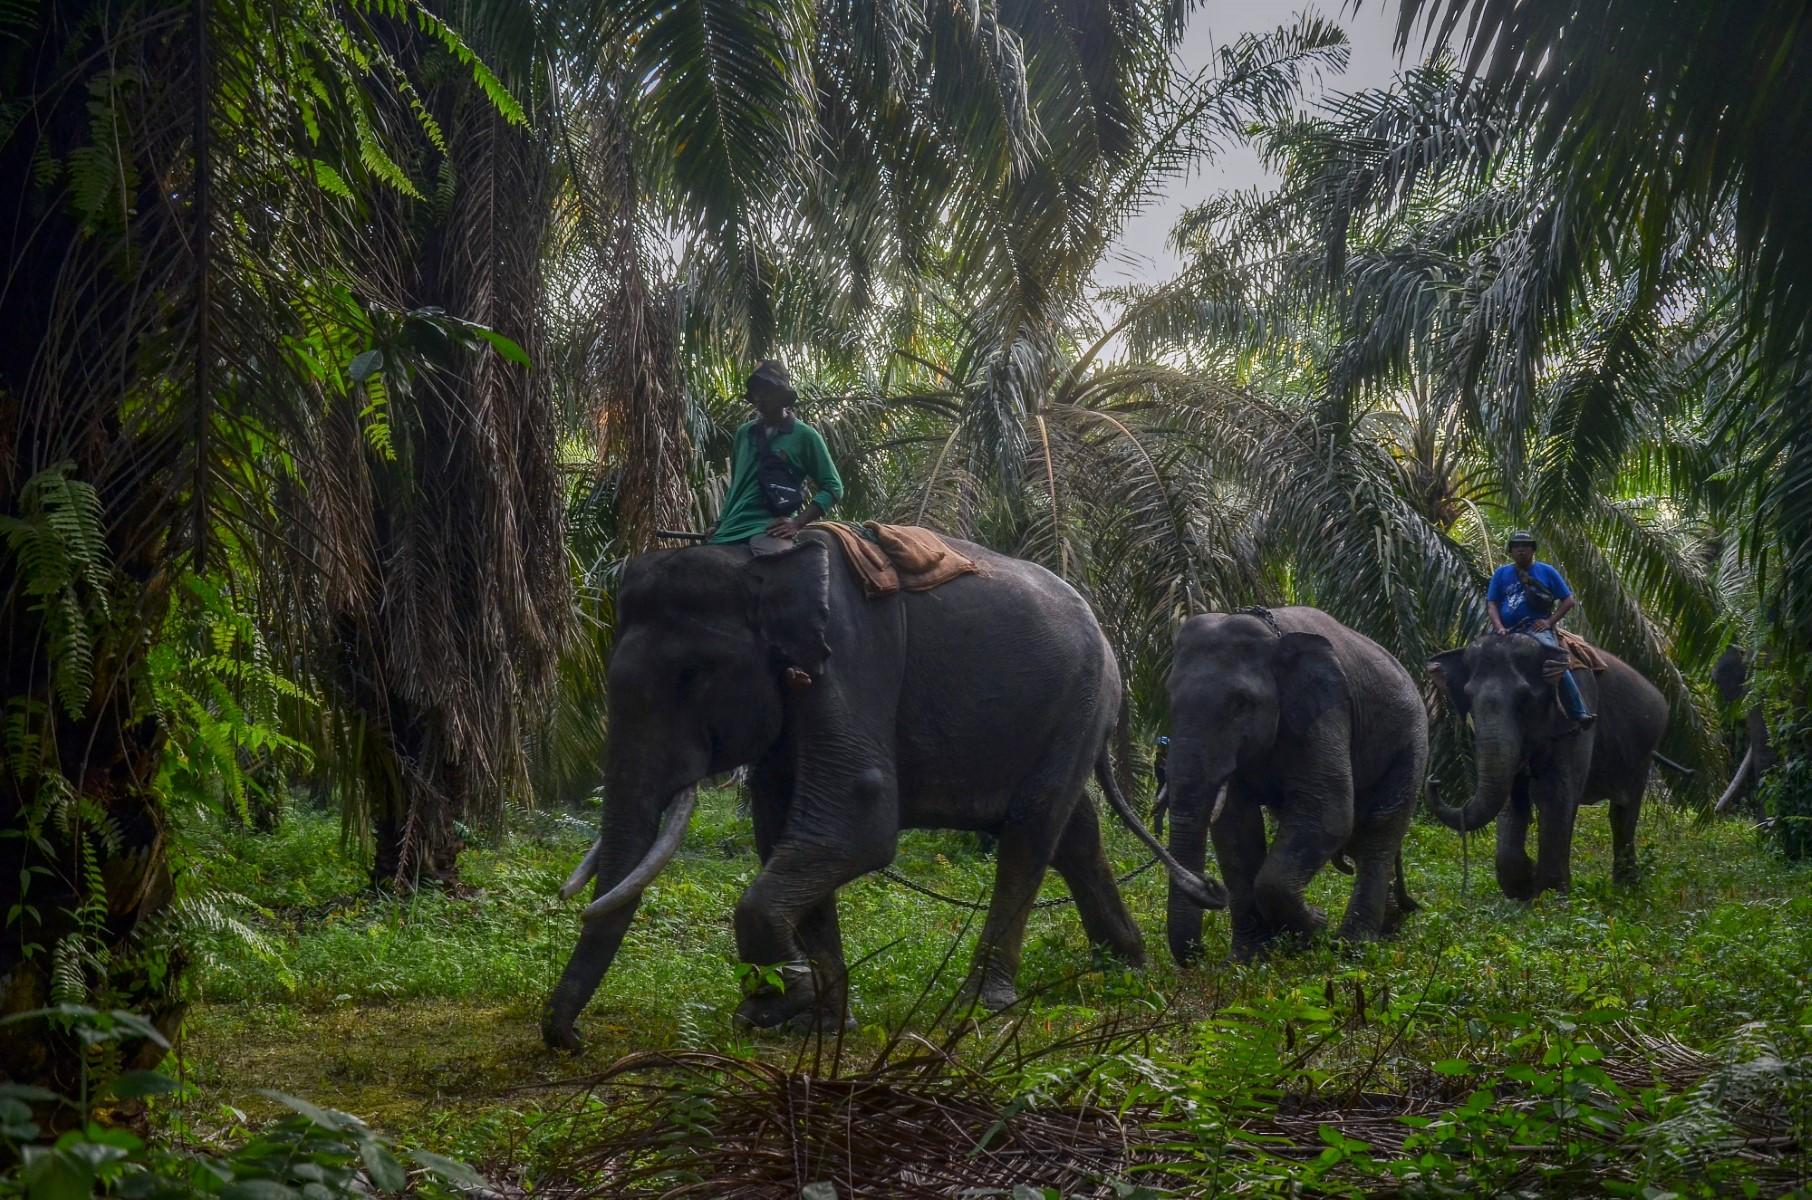 INDONESIA-ANIMAL-ELEPHANT